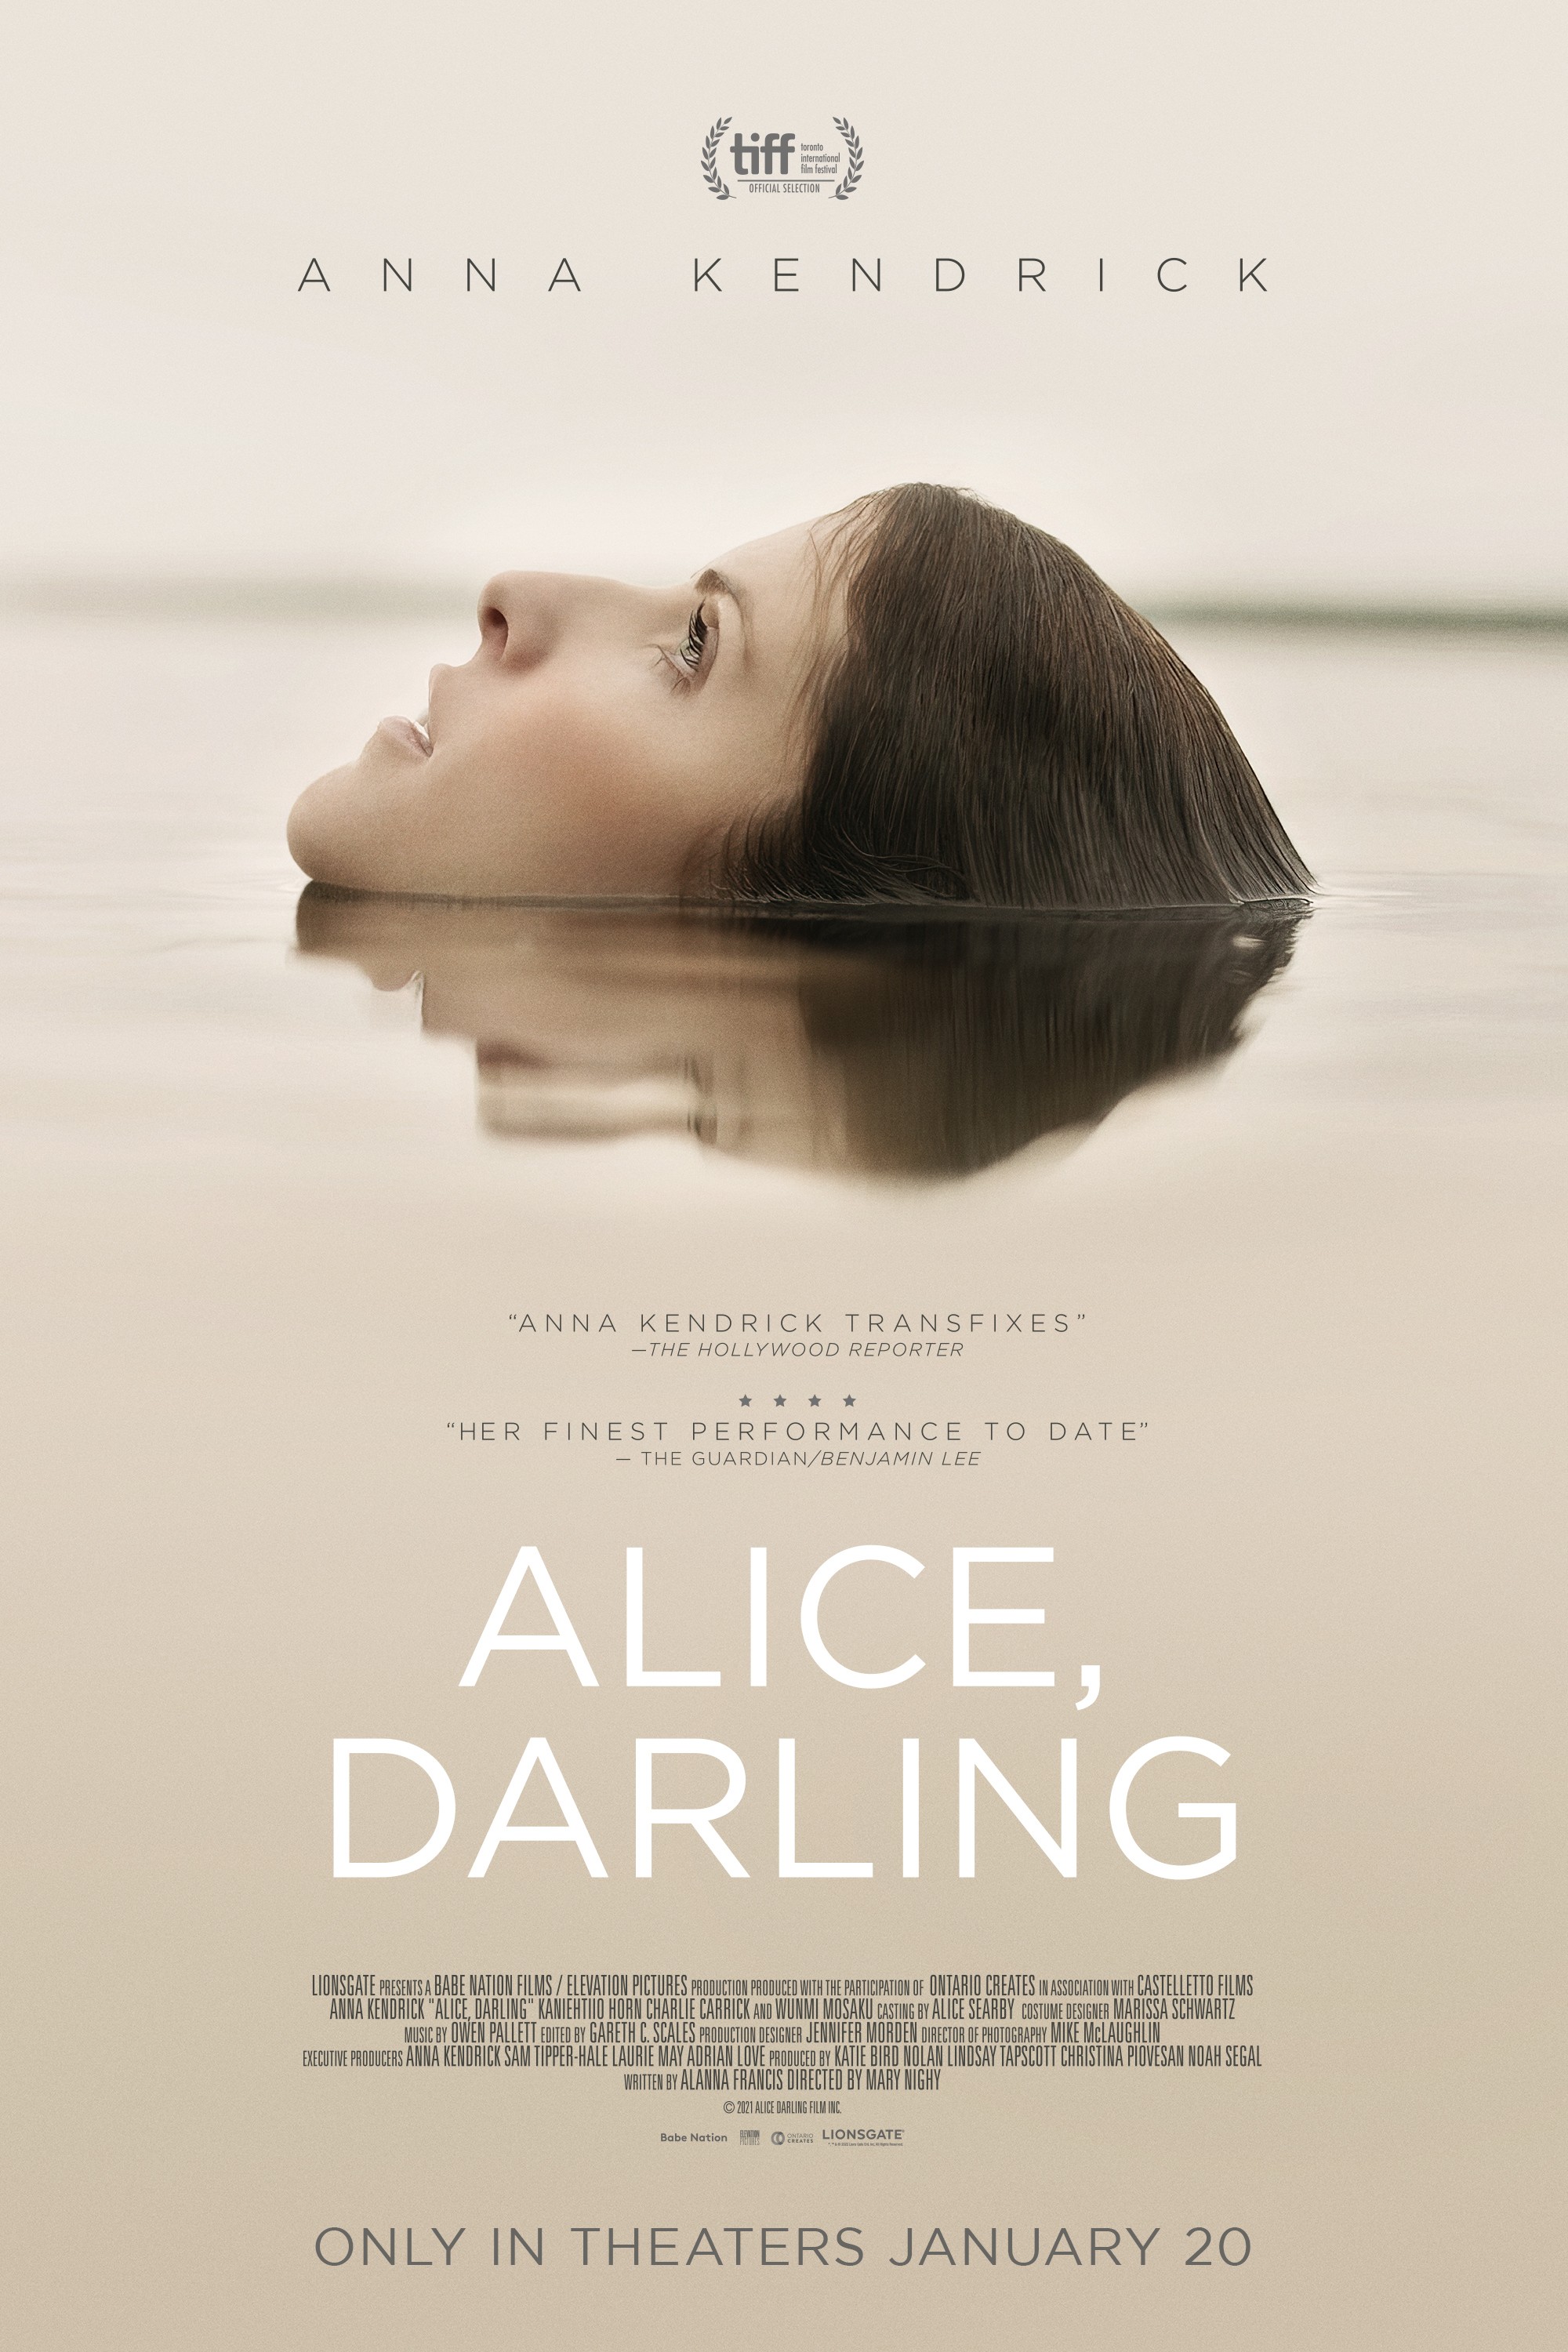 Movie poster for ALICE, DARLING